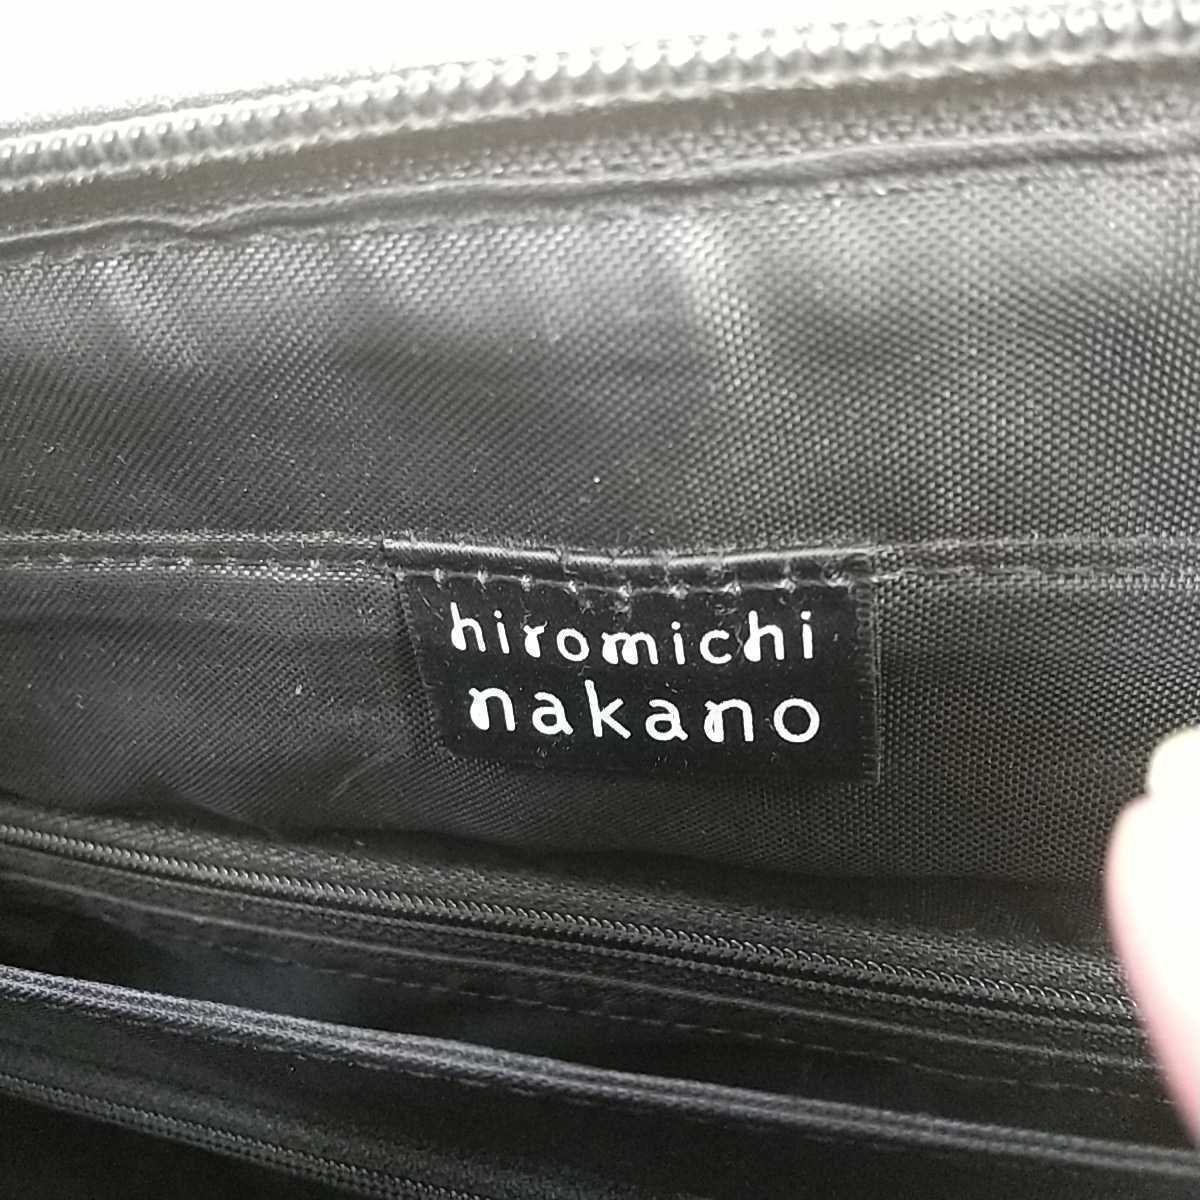 hiromichi nakano ヒロミチ ナカノ リクルートバッグ ビジネスバッグ 黒 革_画像7